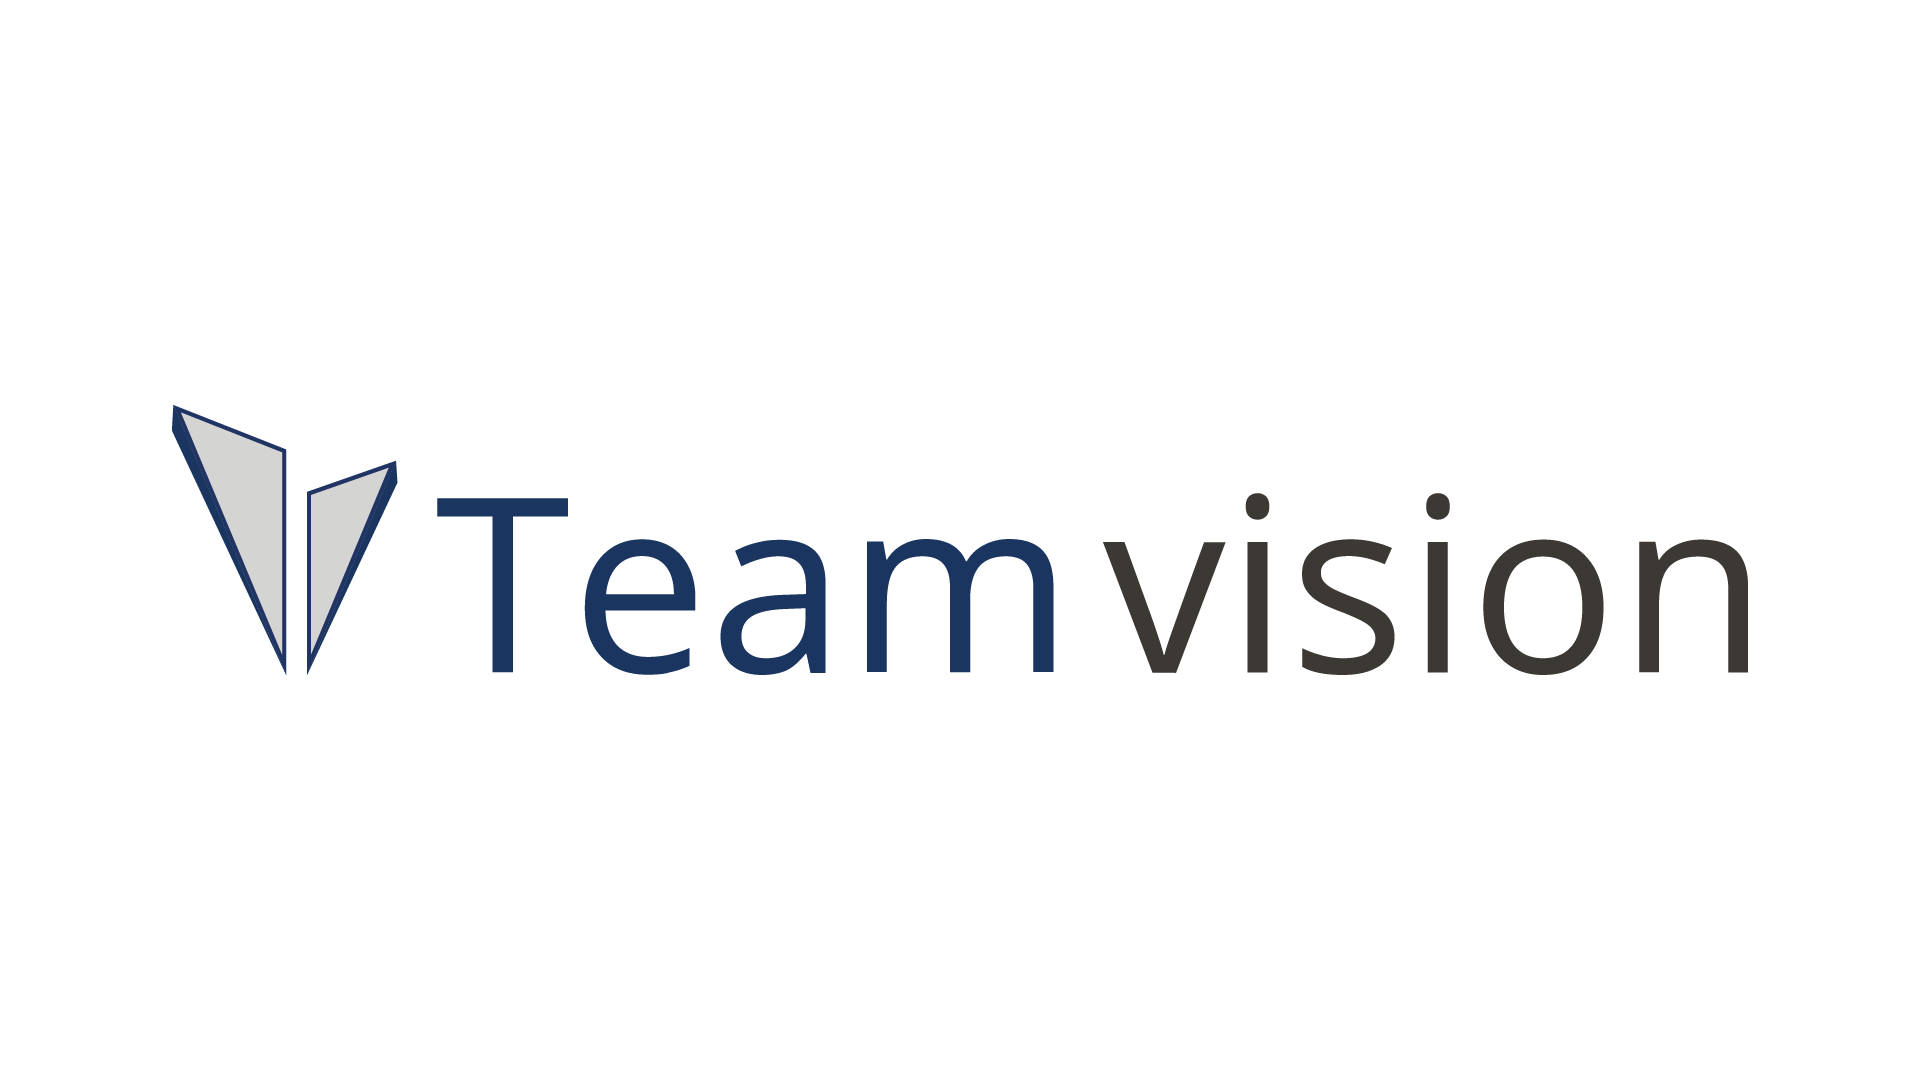 Team vision